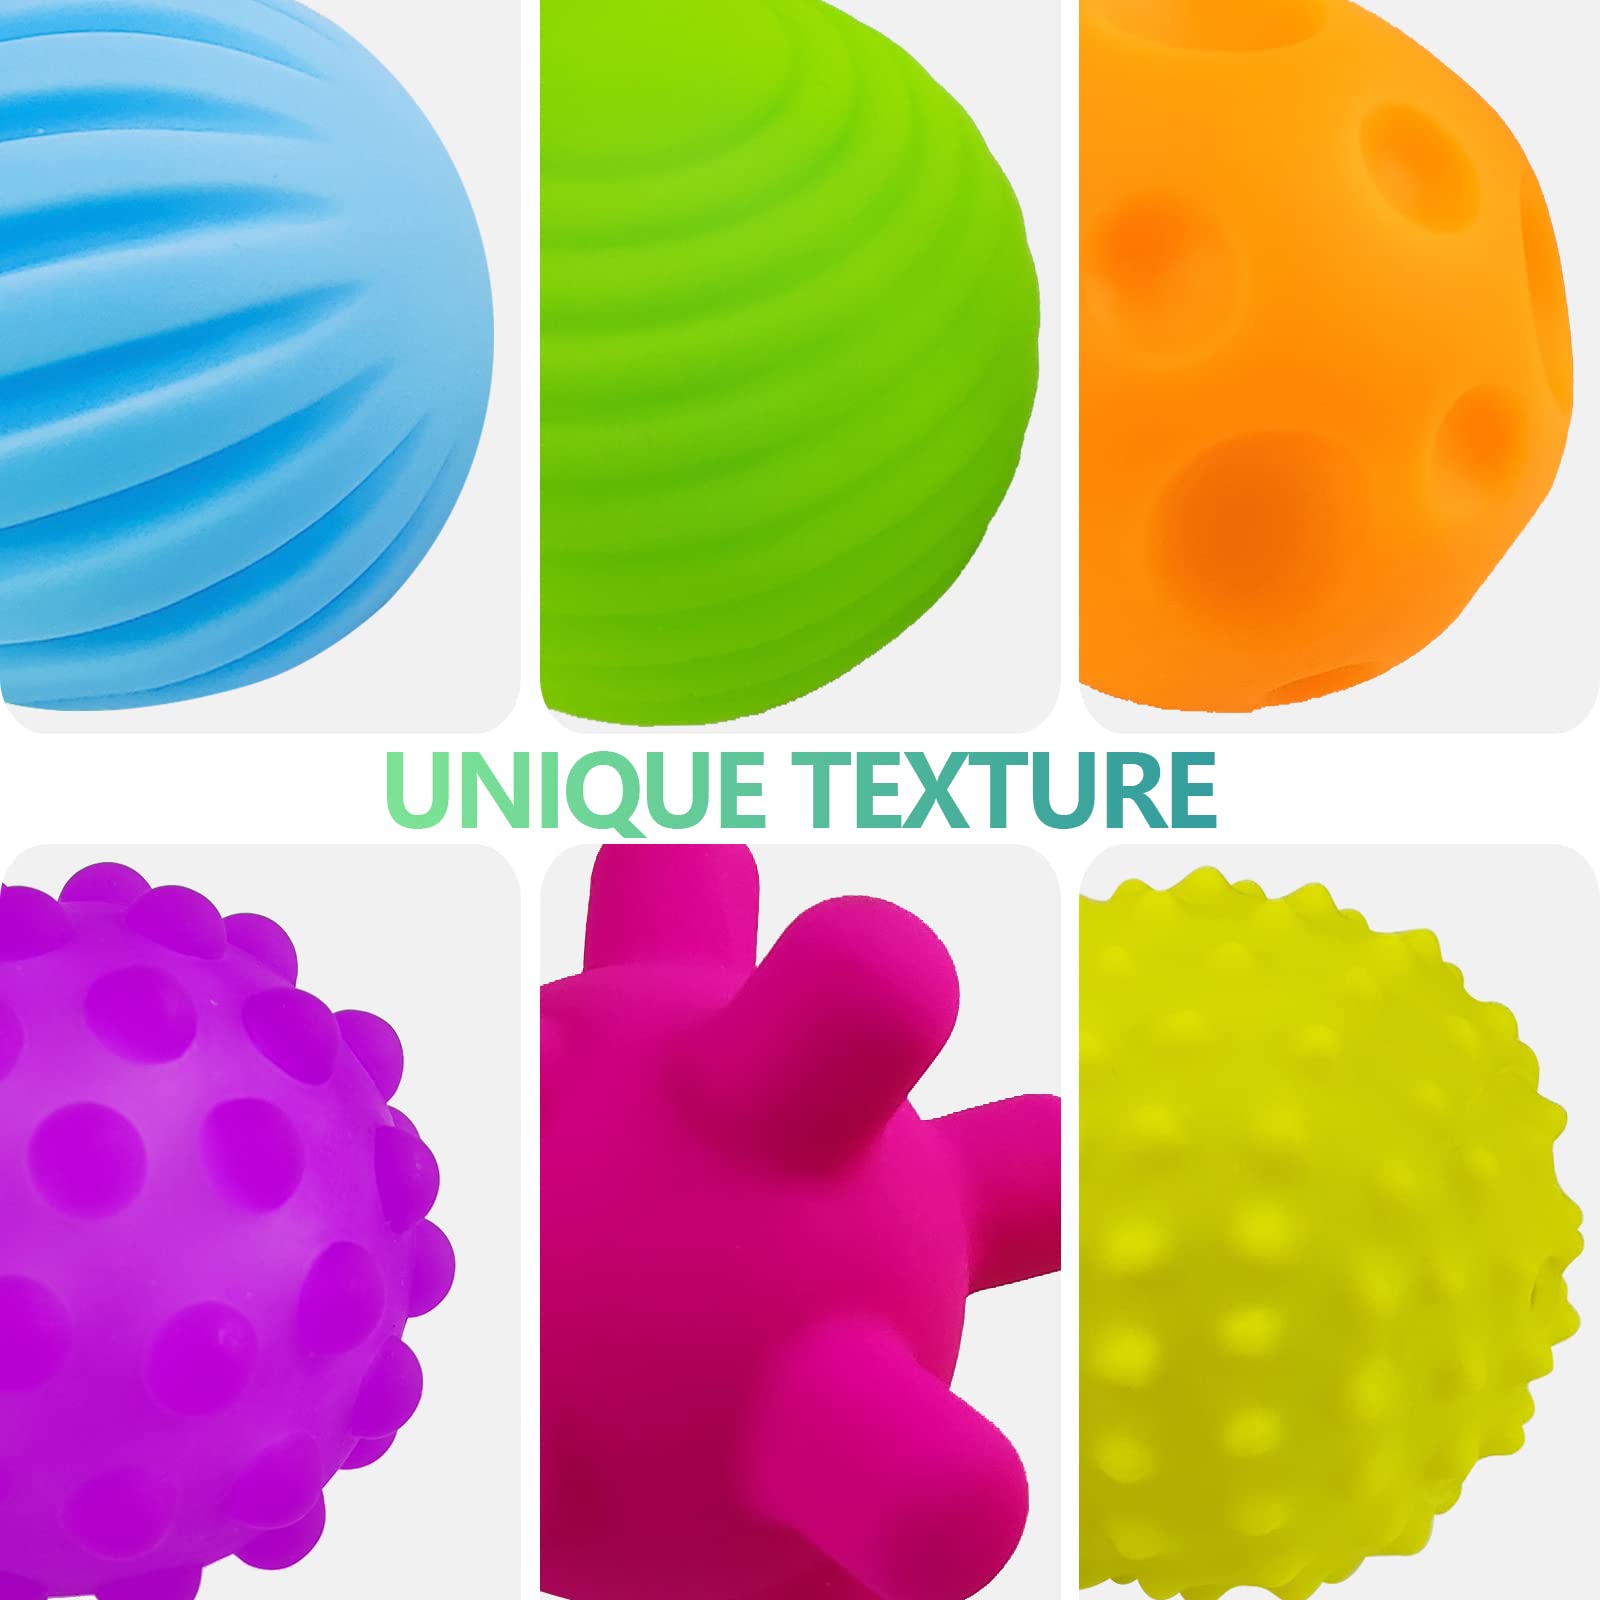 ROHSCE Rattle Ball Sensory Balls for Baby Toys Set, Massage Stress Relief Textured Multi Balls, Infant Teething Ball Sensory Toys for Babies, 7 Pieces